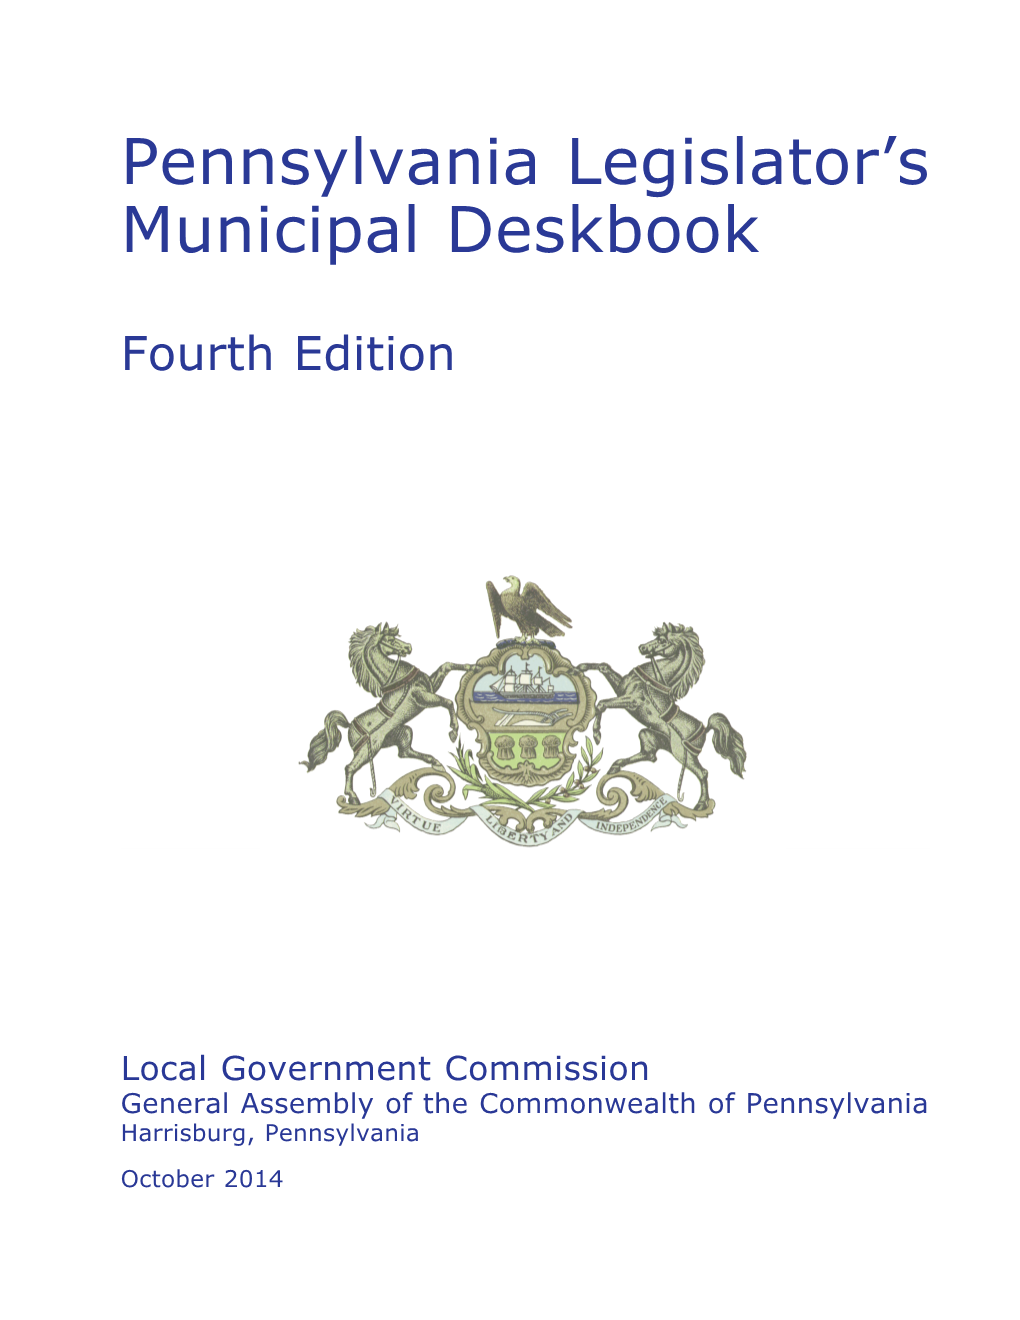 Pennsylvania Legislator's Municipal Deskbook